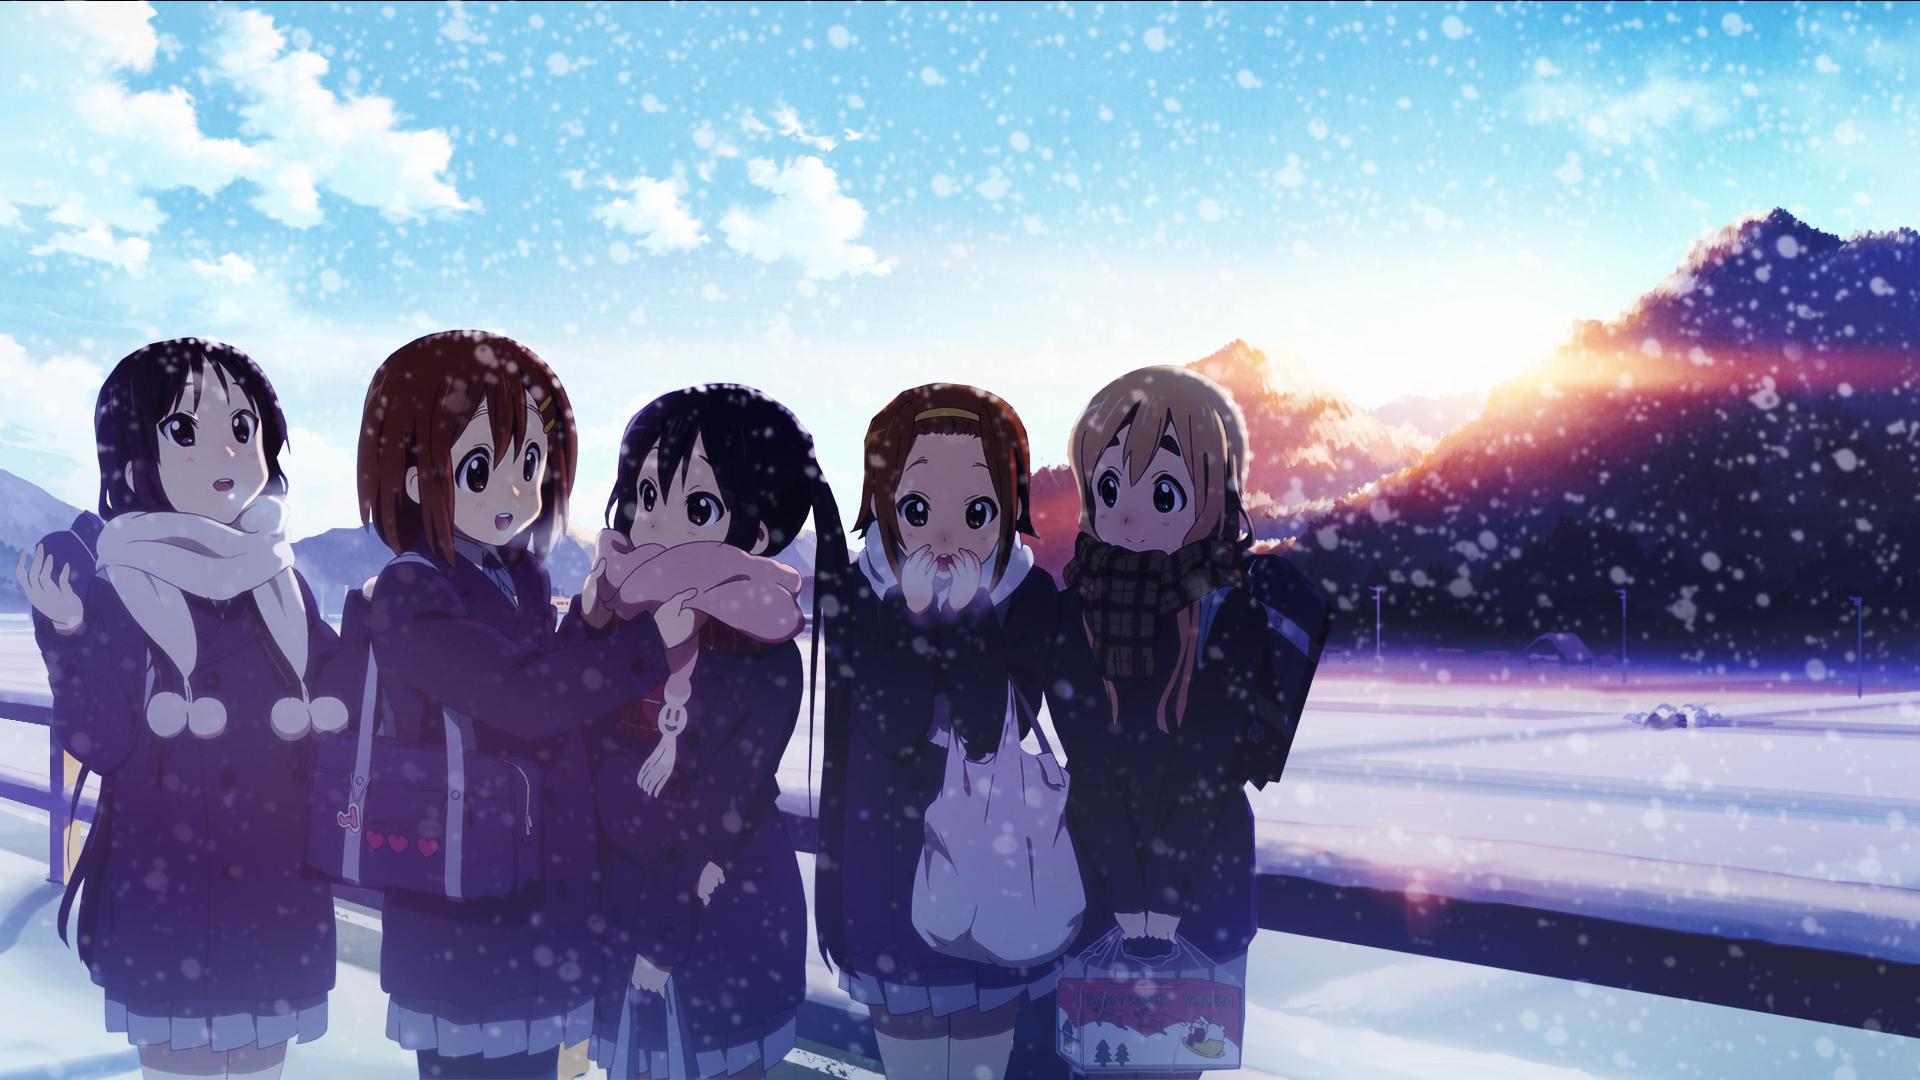 Sweet Wallpaper Special: Cute Anime Girls